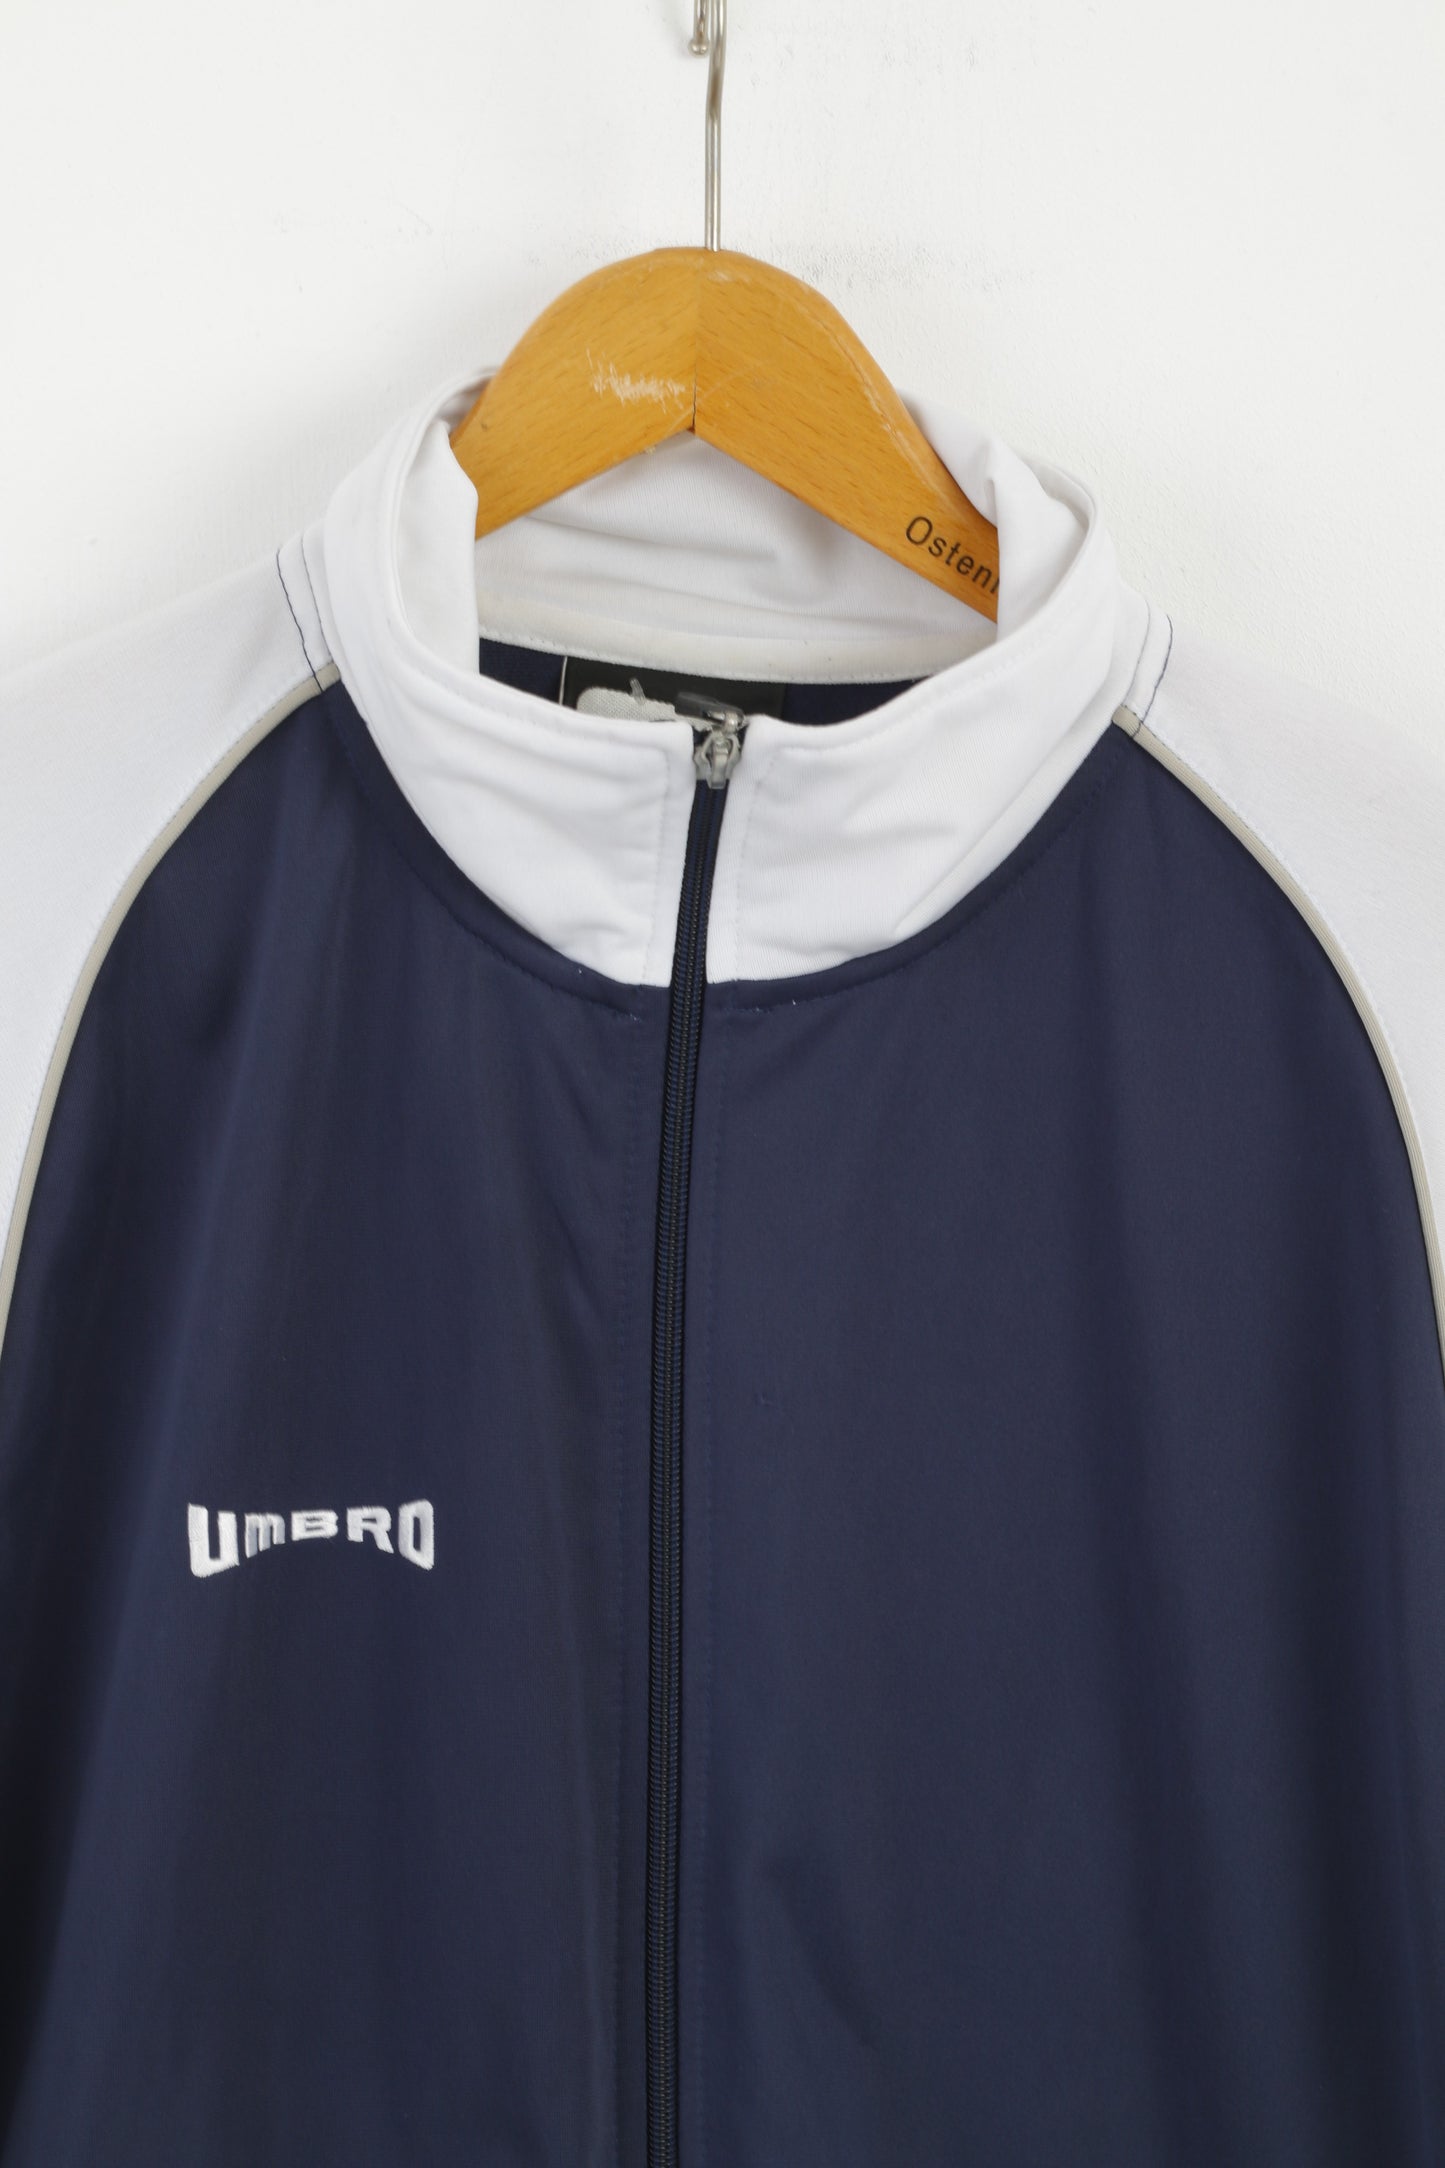 Umbro Men XL Sweatshirt Navy White Shiny Full Zipper Active Track Top